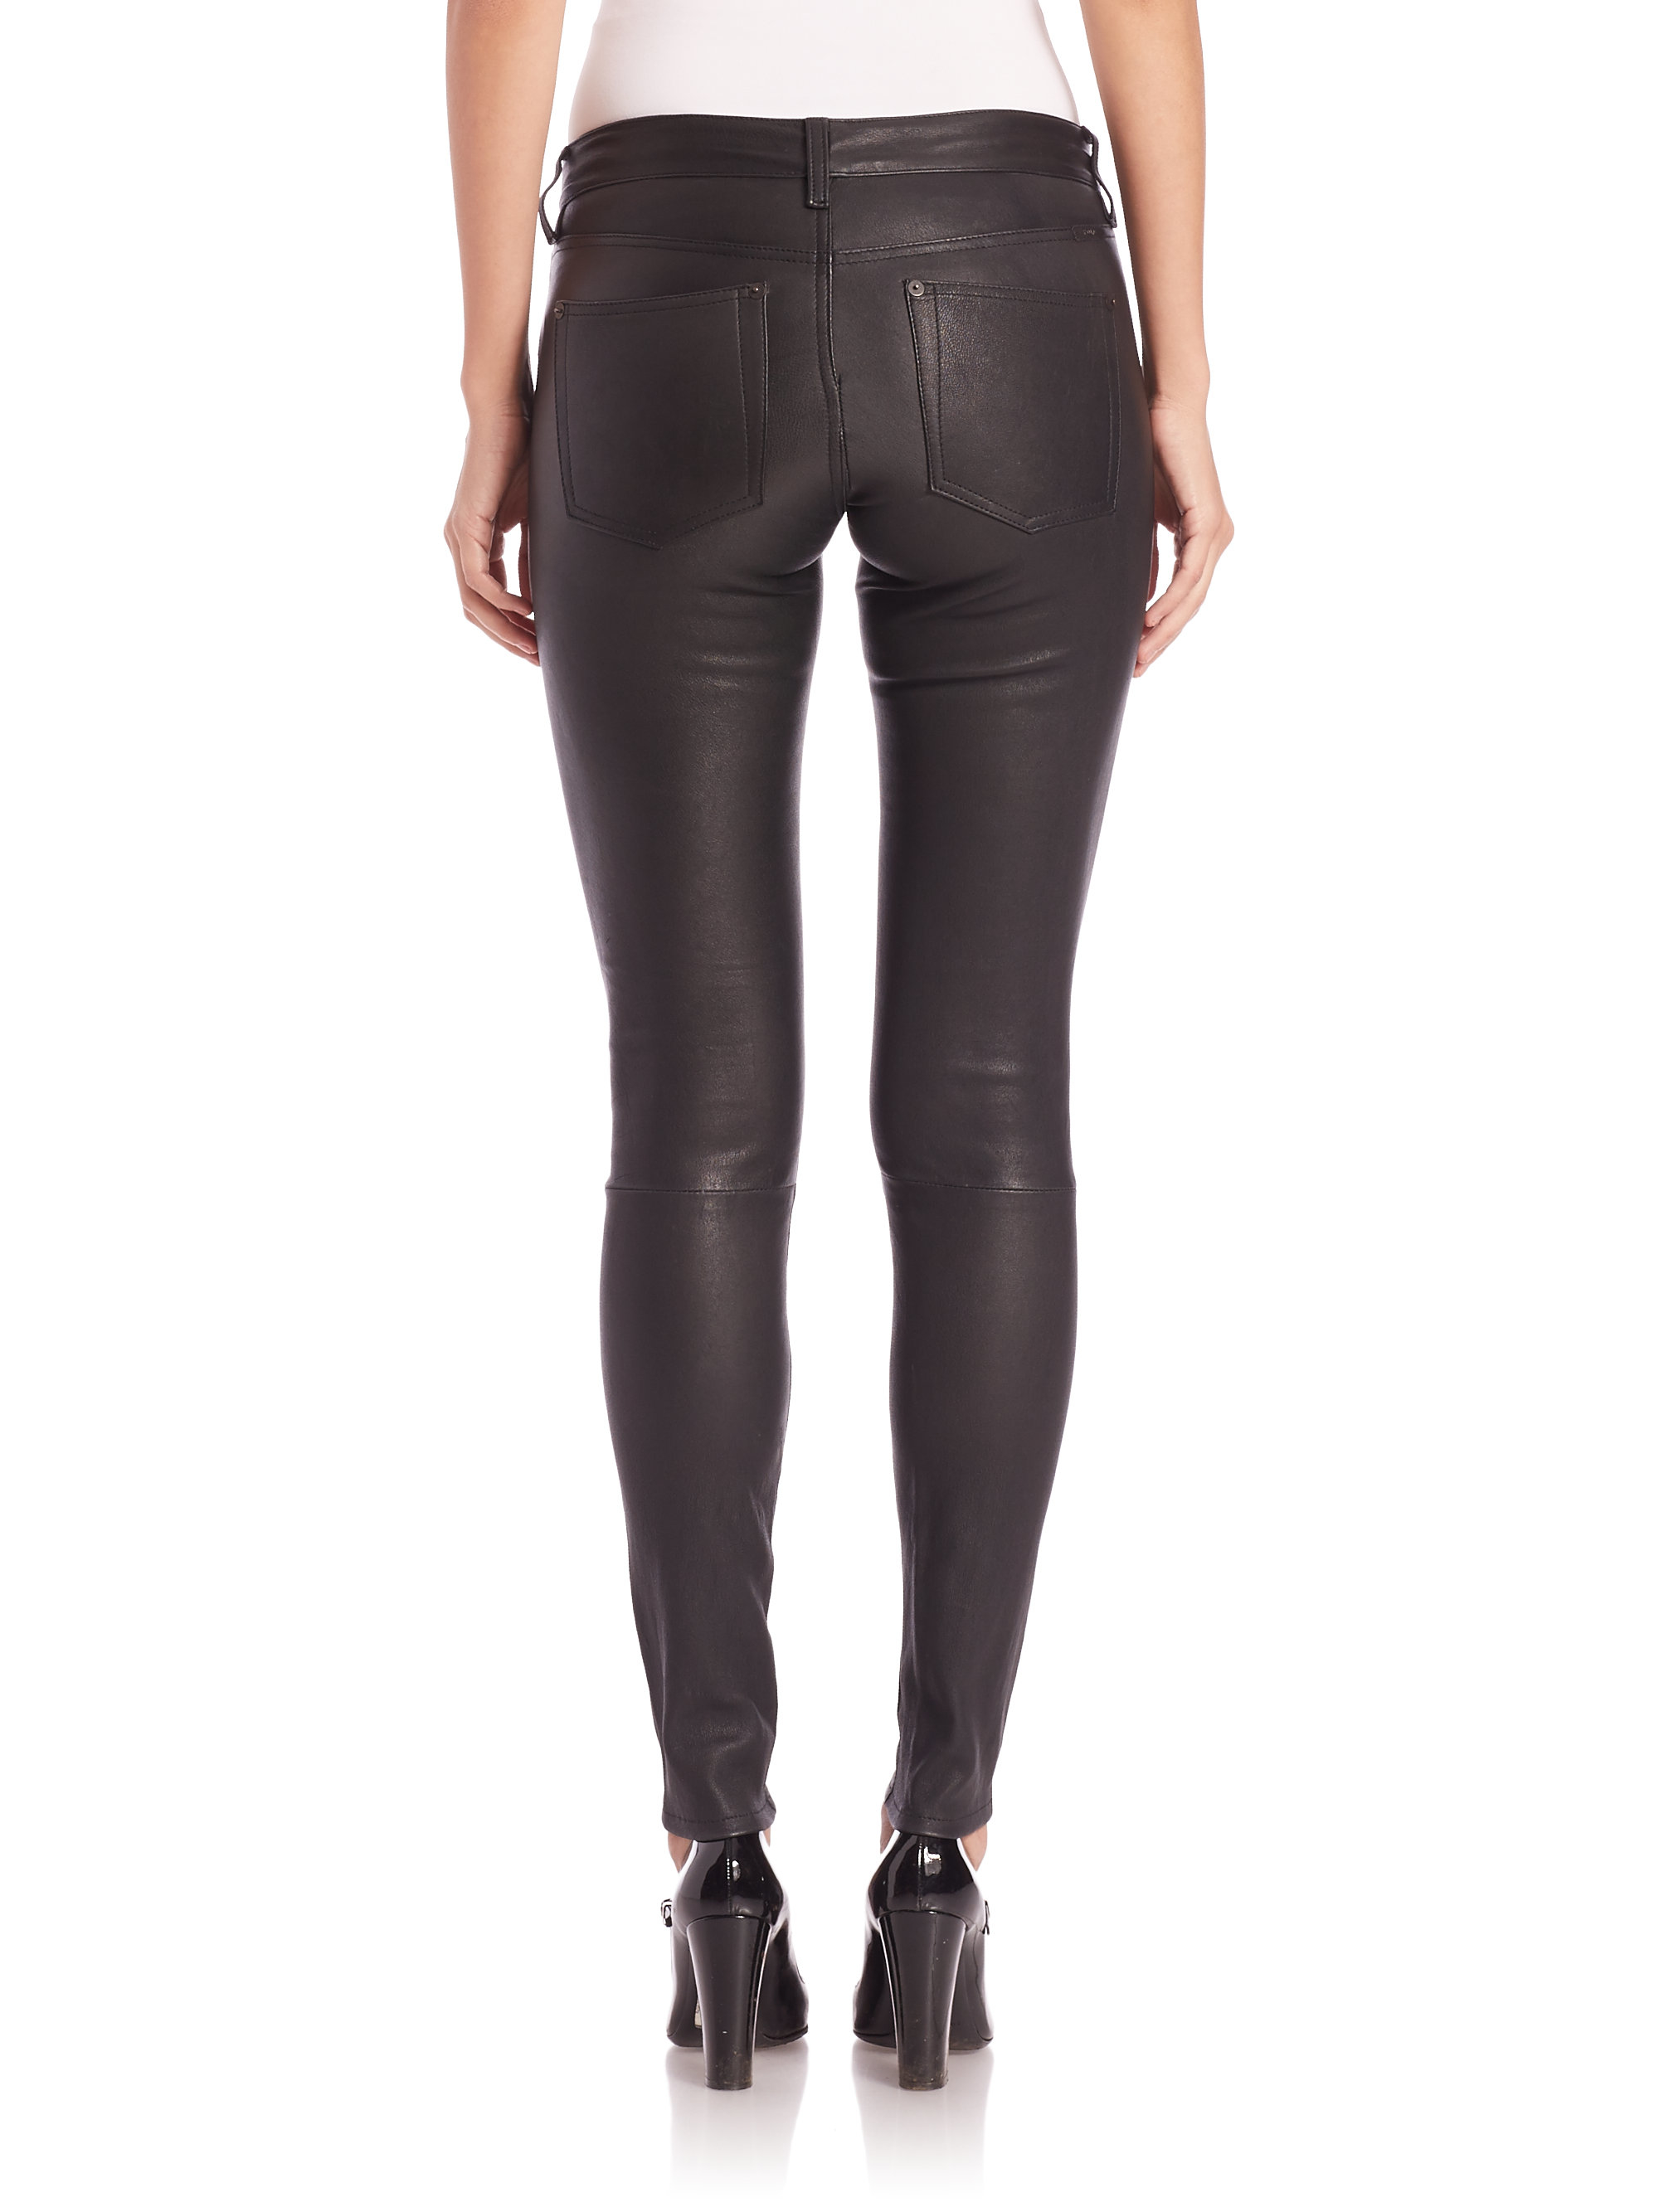 Lyst - Polo Ralph Lauren Leather Skinny Pants in Black